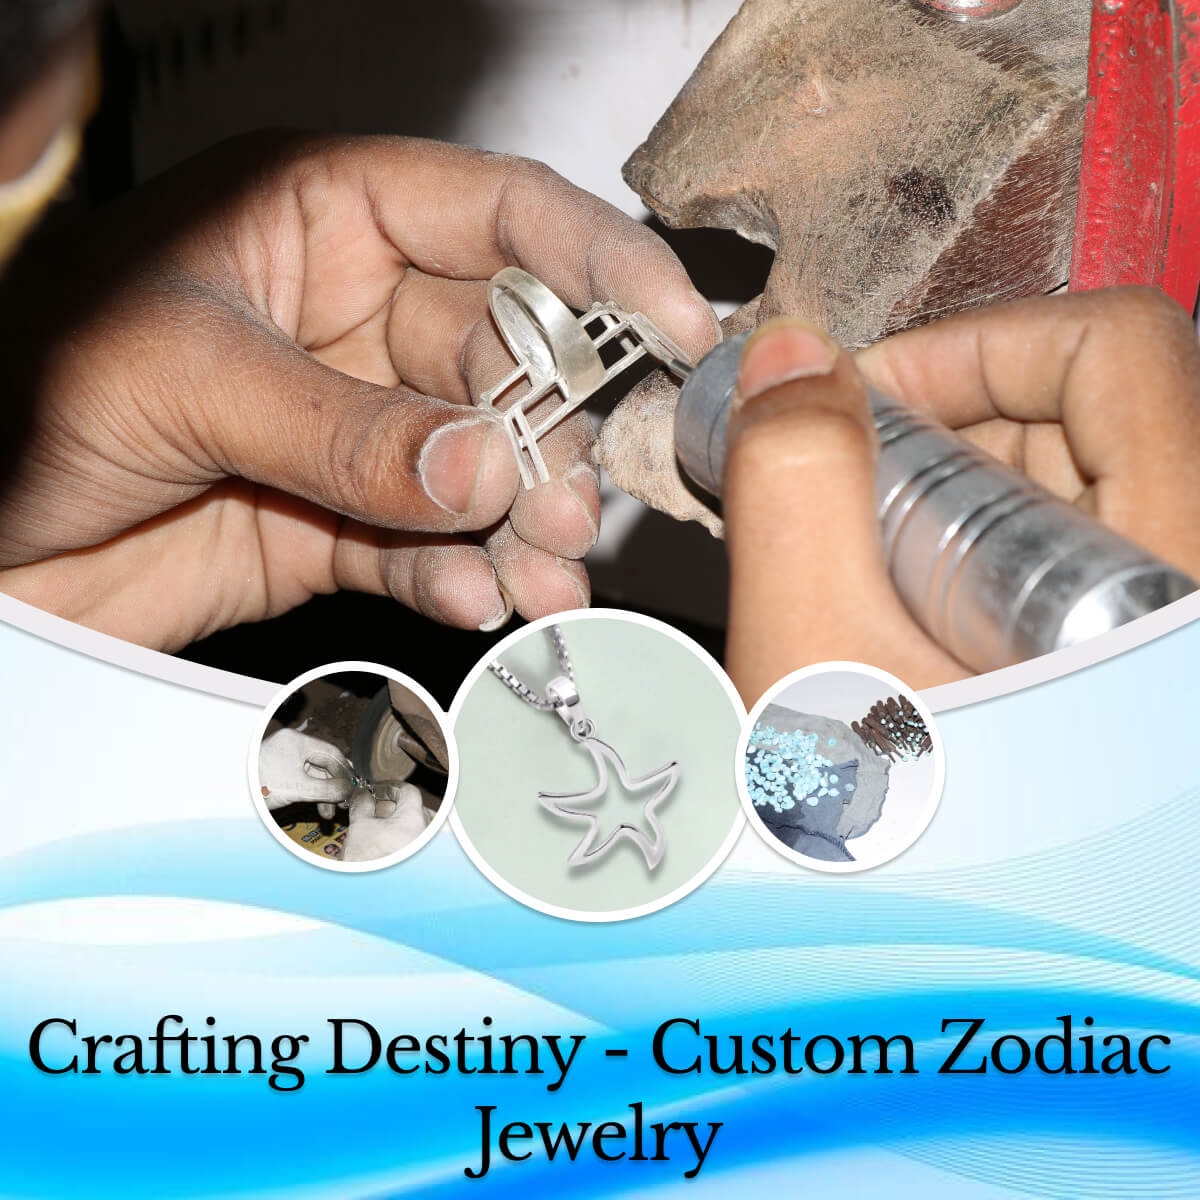 Embracing Diversity Through Customized Zodiac Sign Jewelry